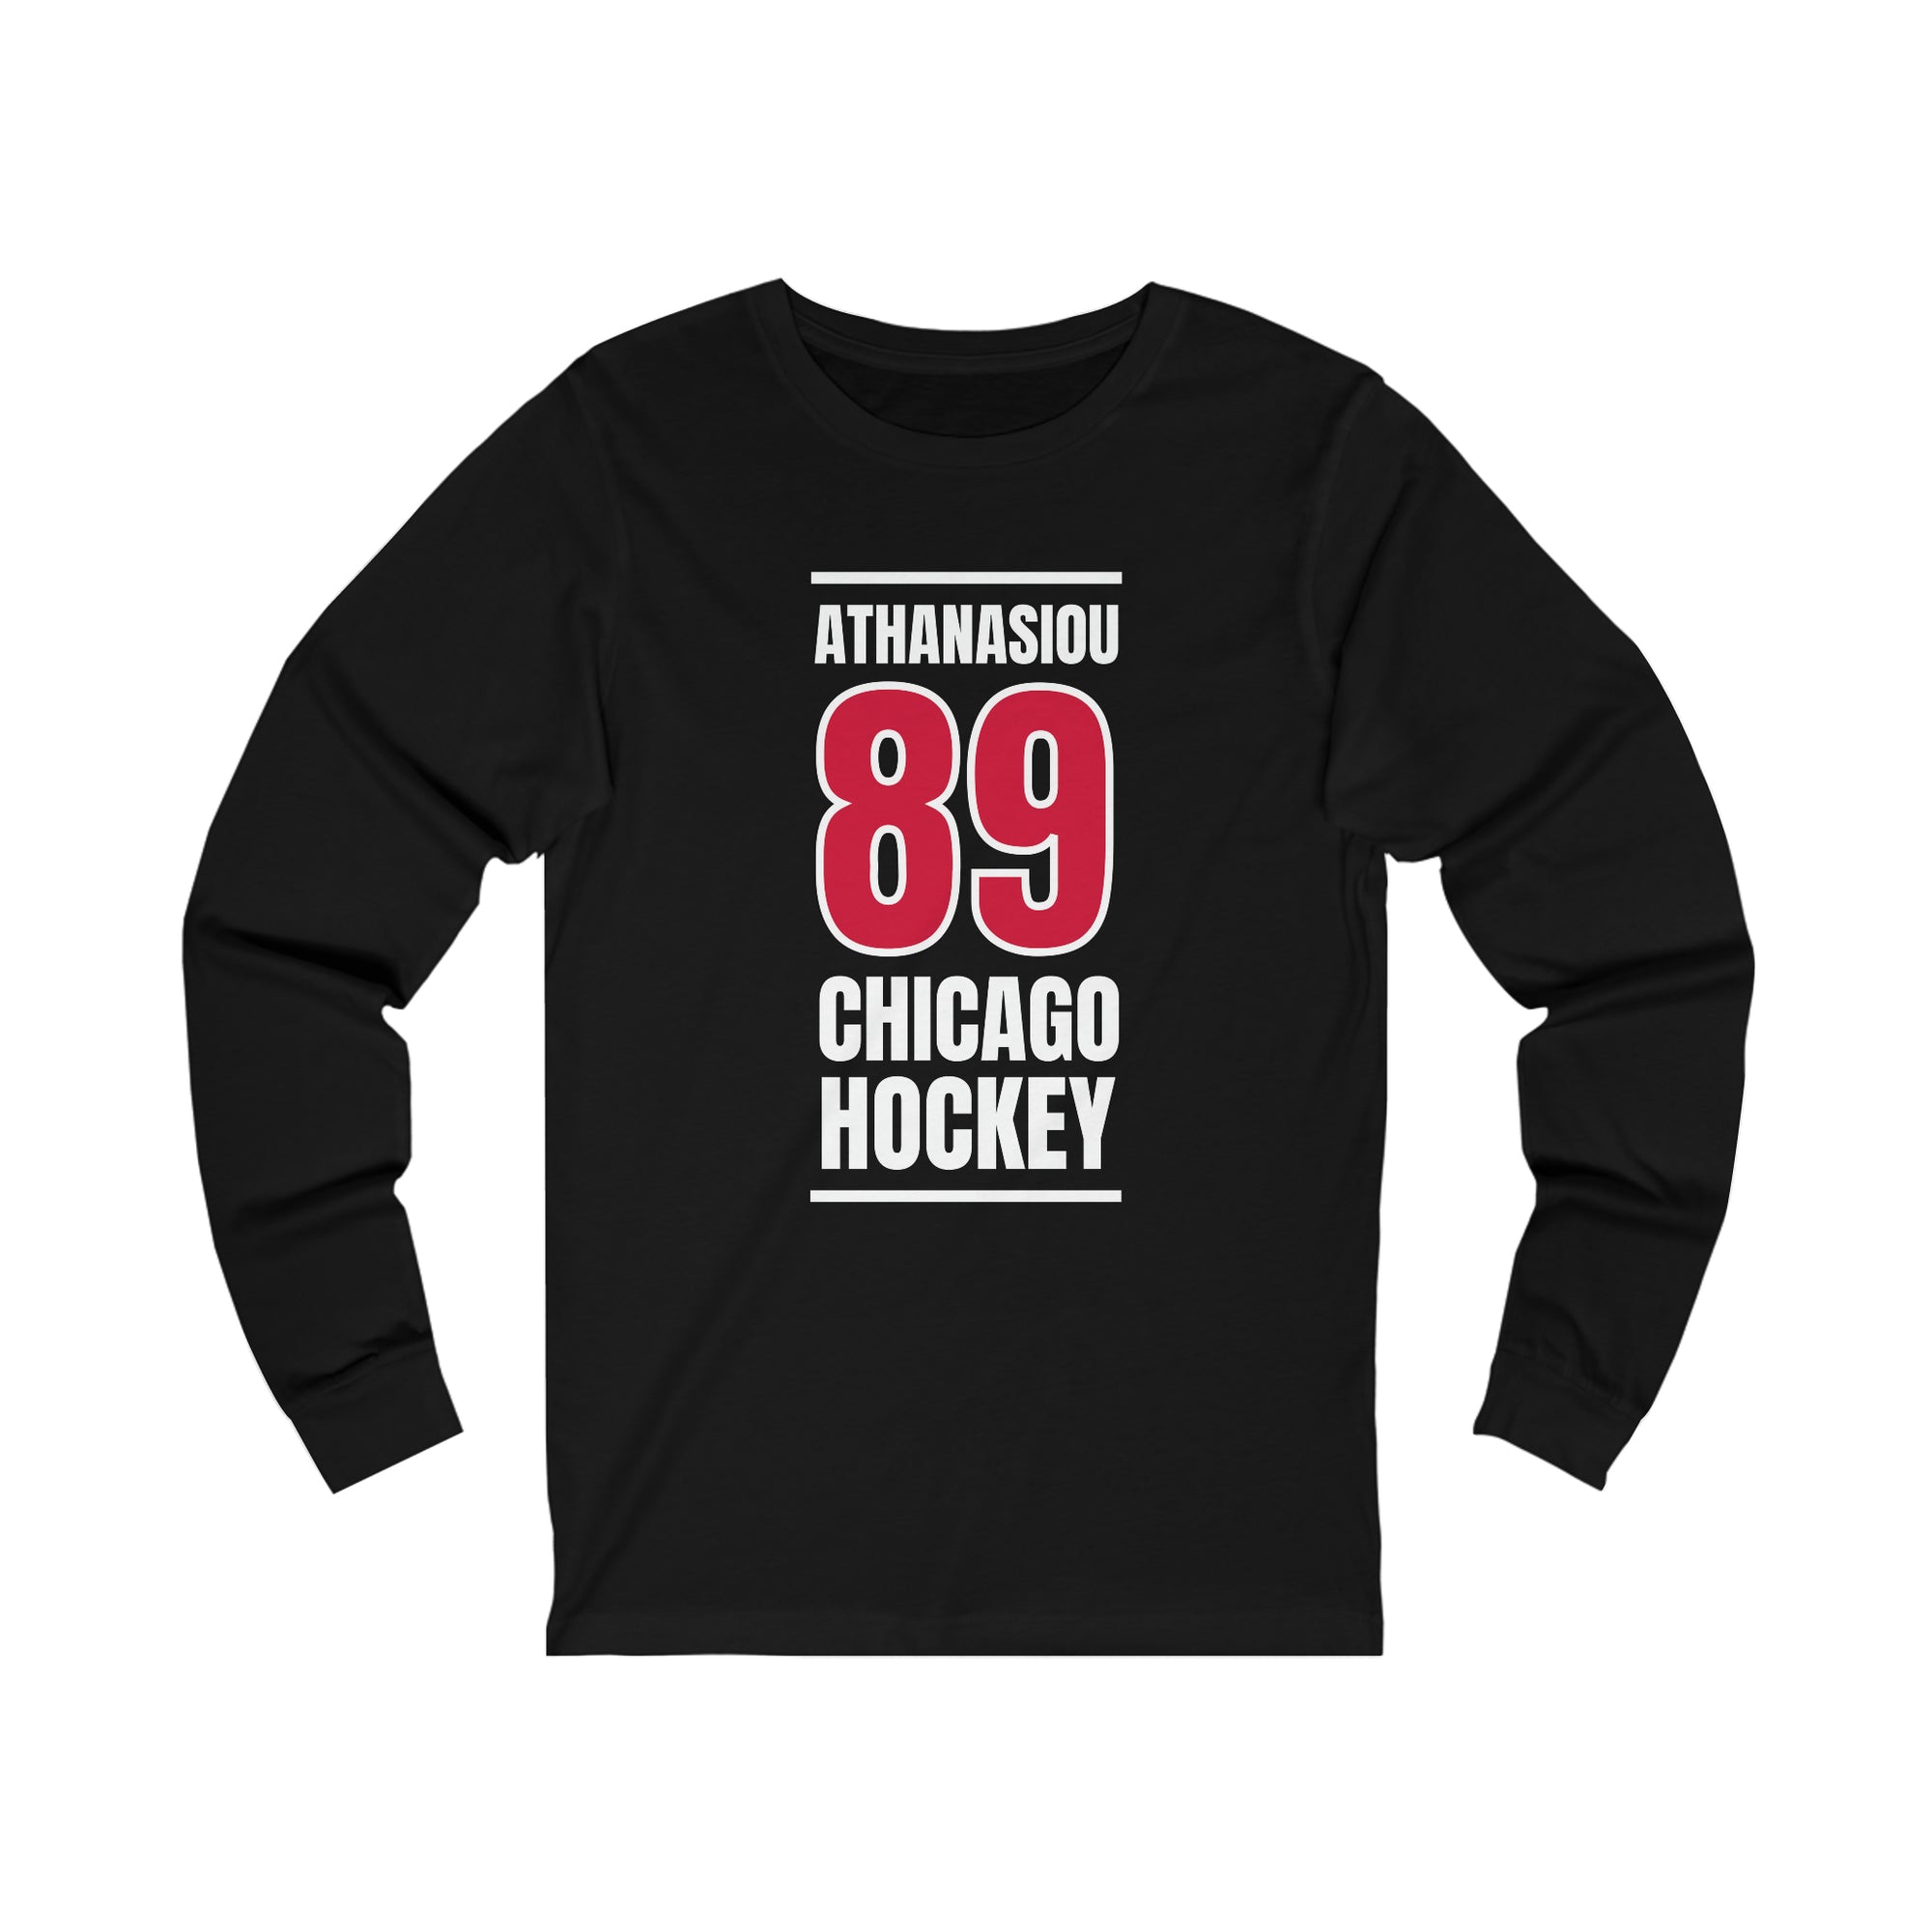 Athanasiou 89 Chicago Hockey Red Vertical Design Unisex Jersey Long Sleeve Shirt